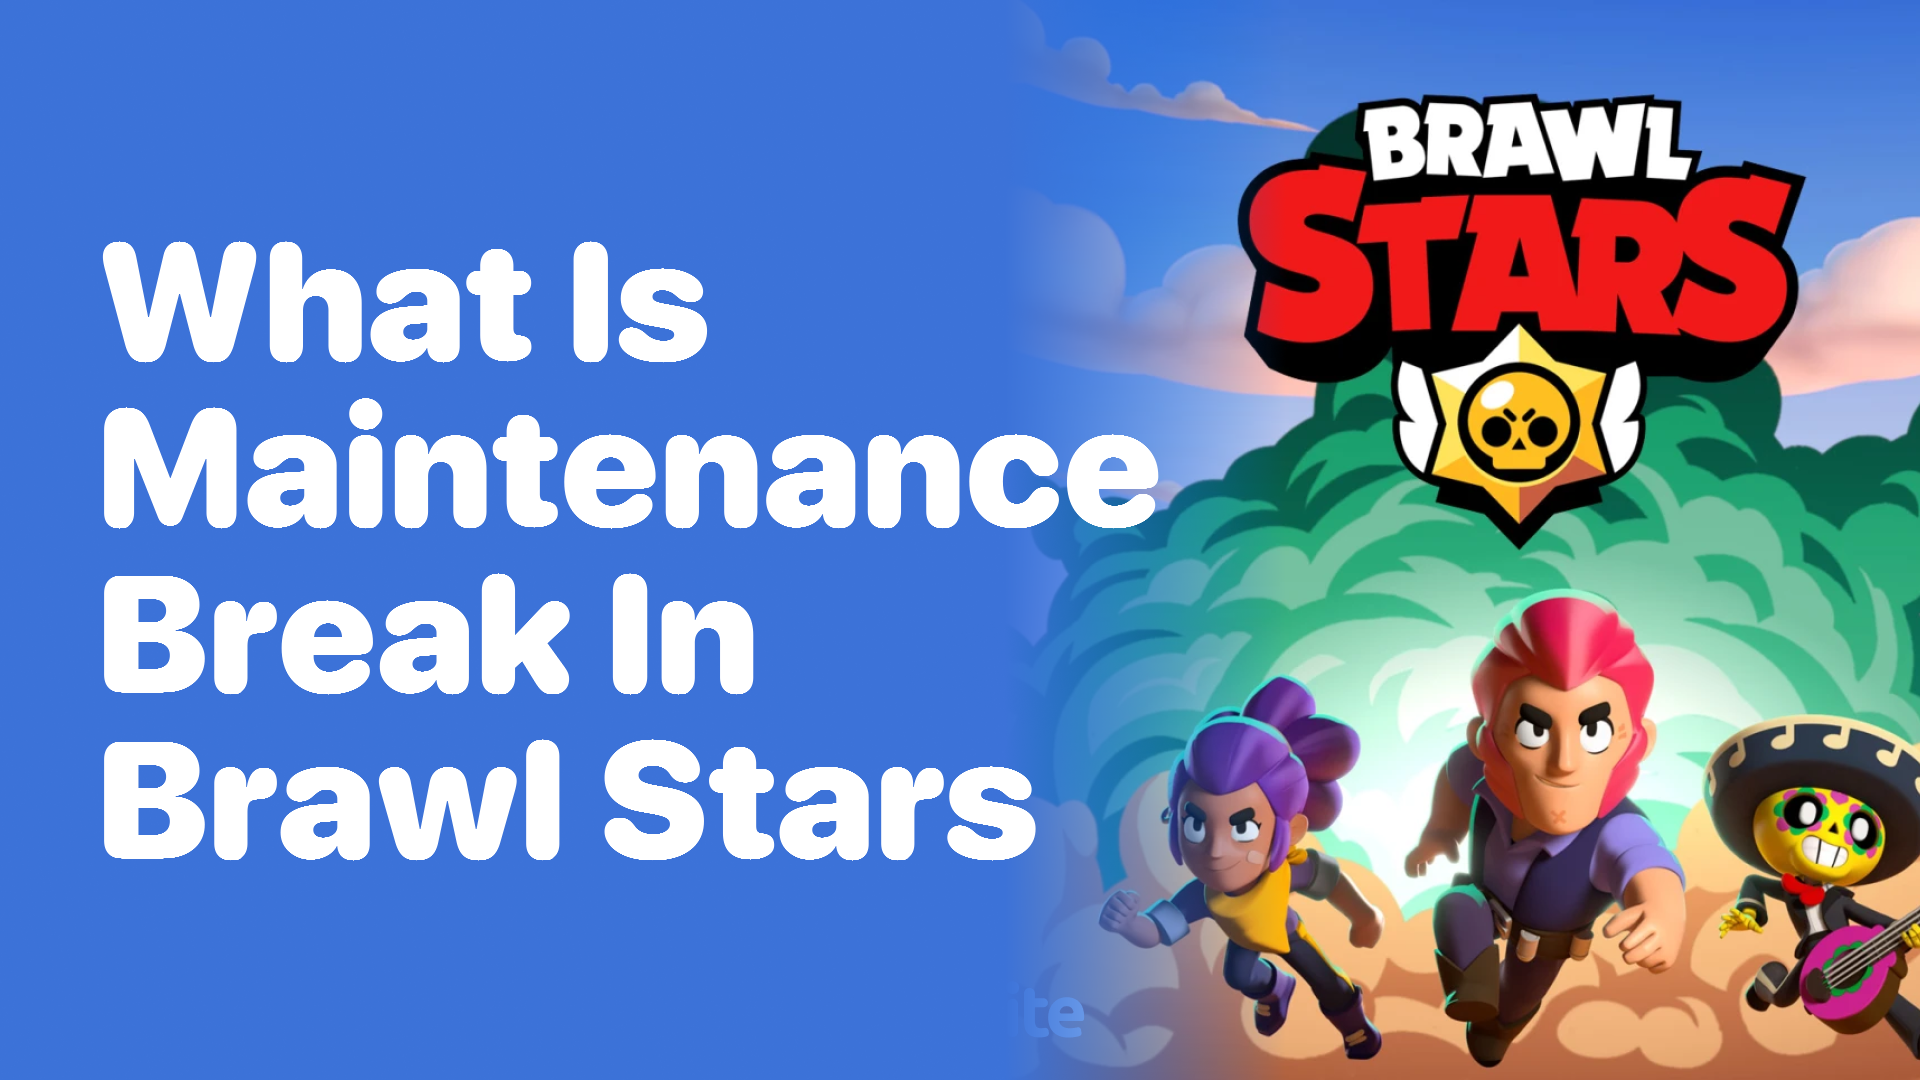 Brawl Stars - Maintenance on the way! We're improving